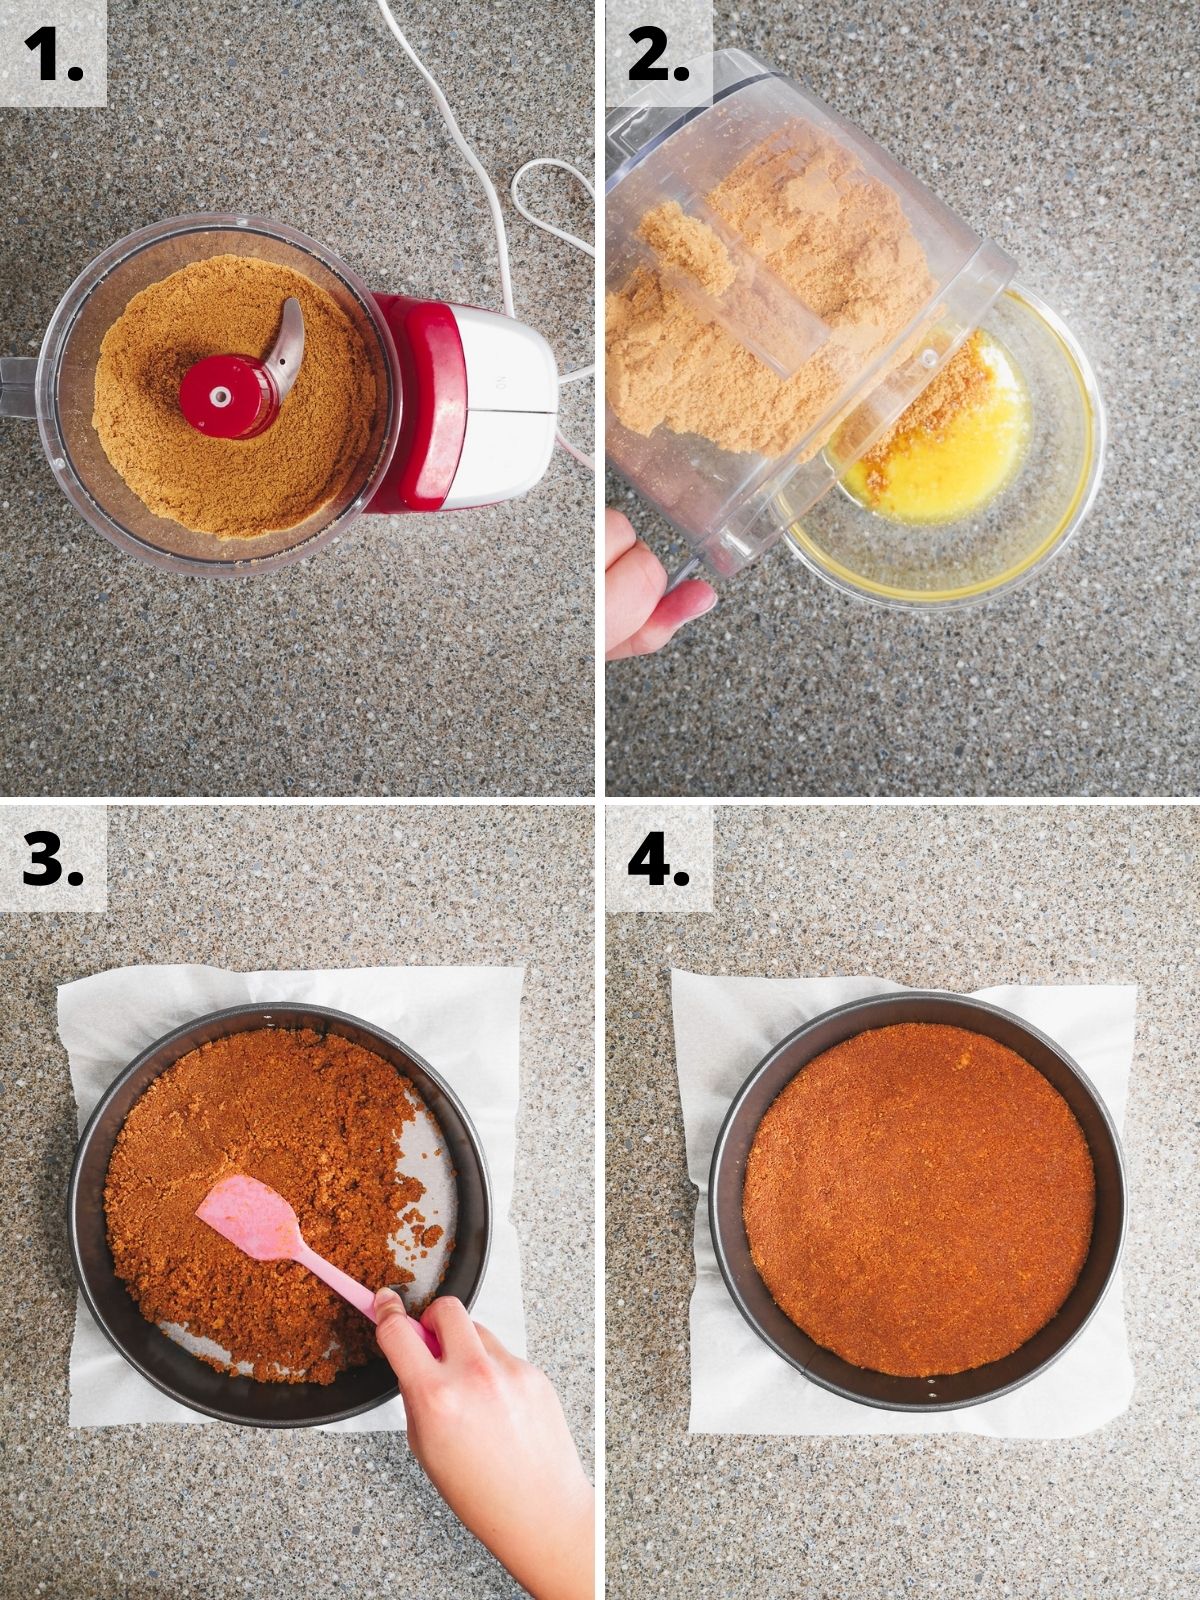 Pumpkin pecan cheesecake recipe method base steps 1-4